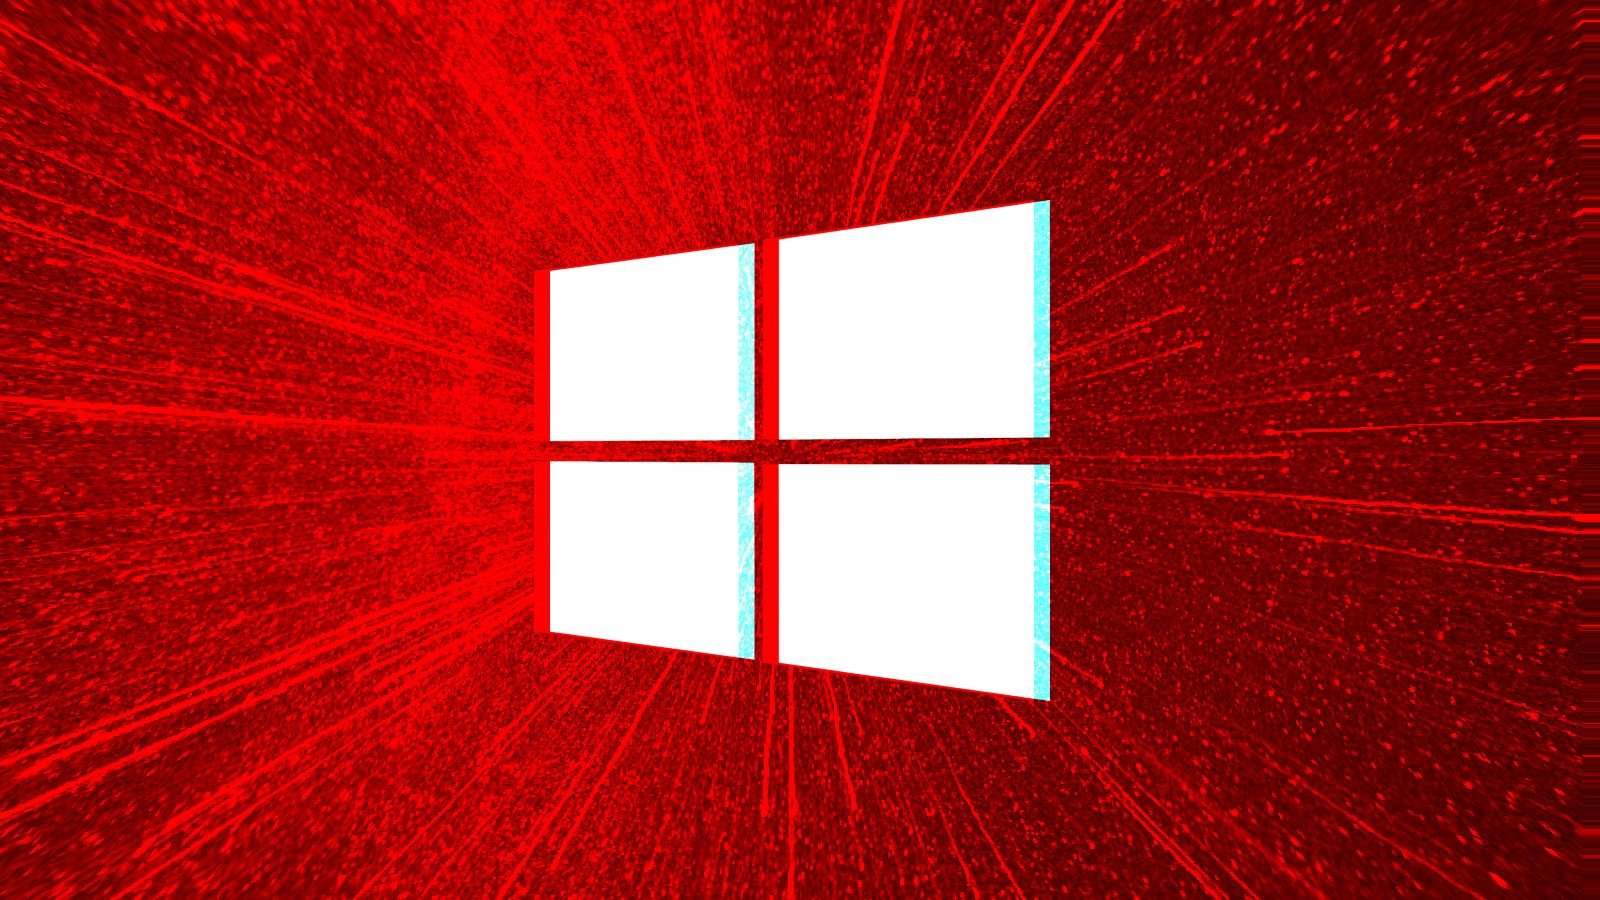 Windows logo over a red splash